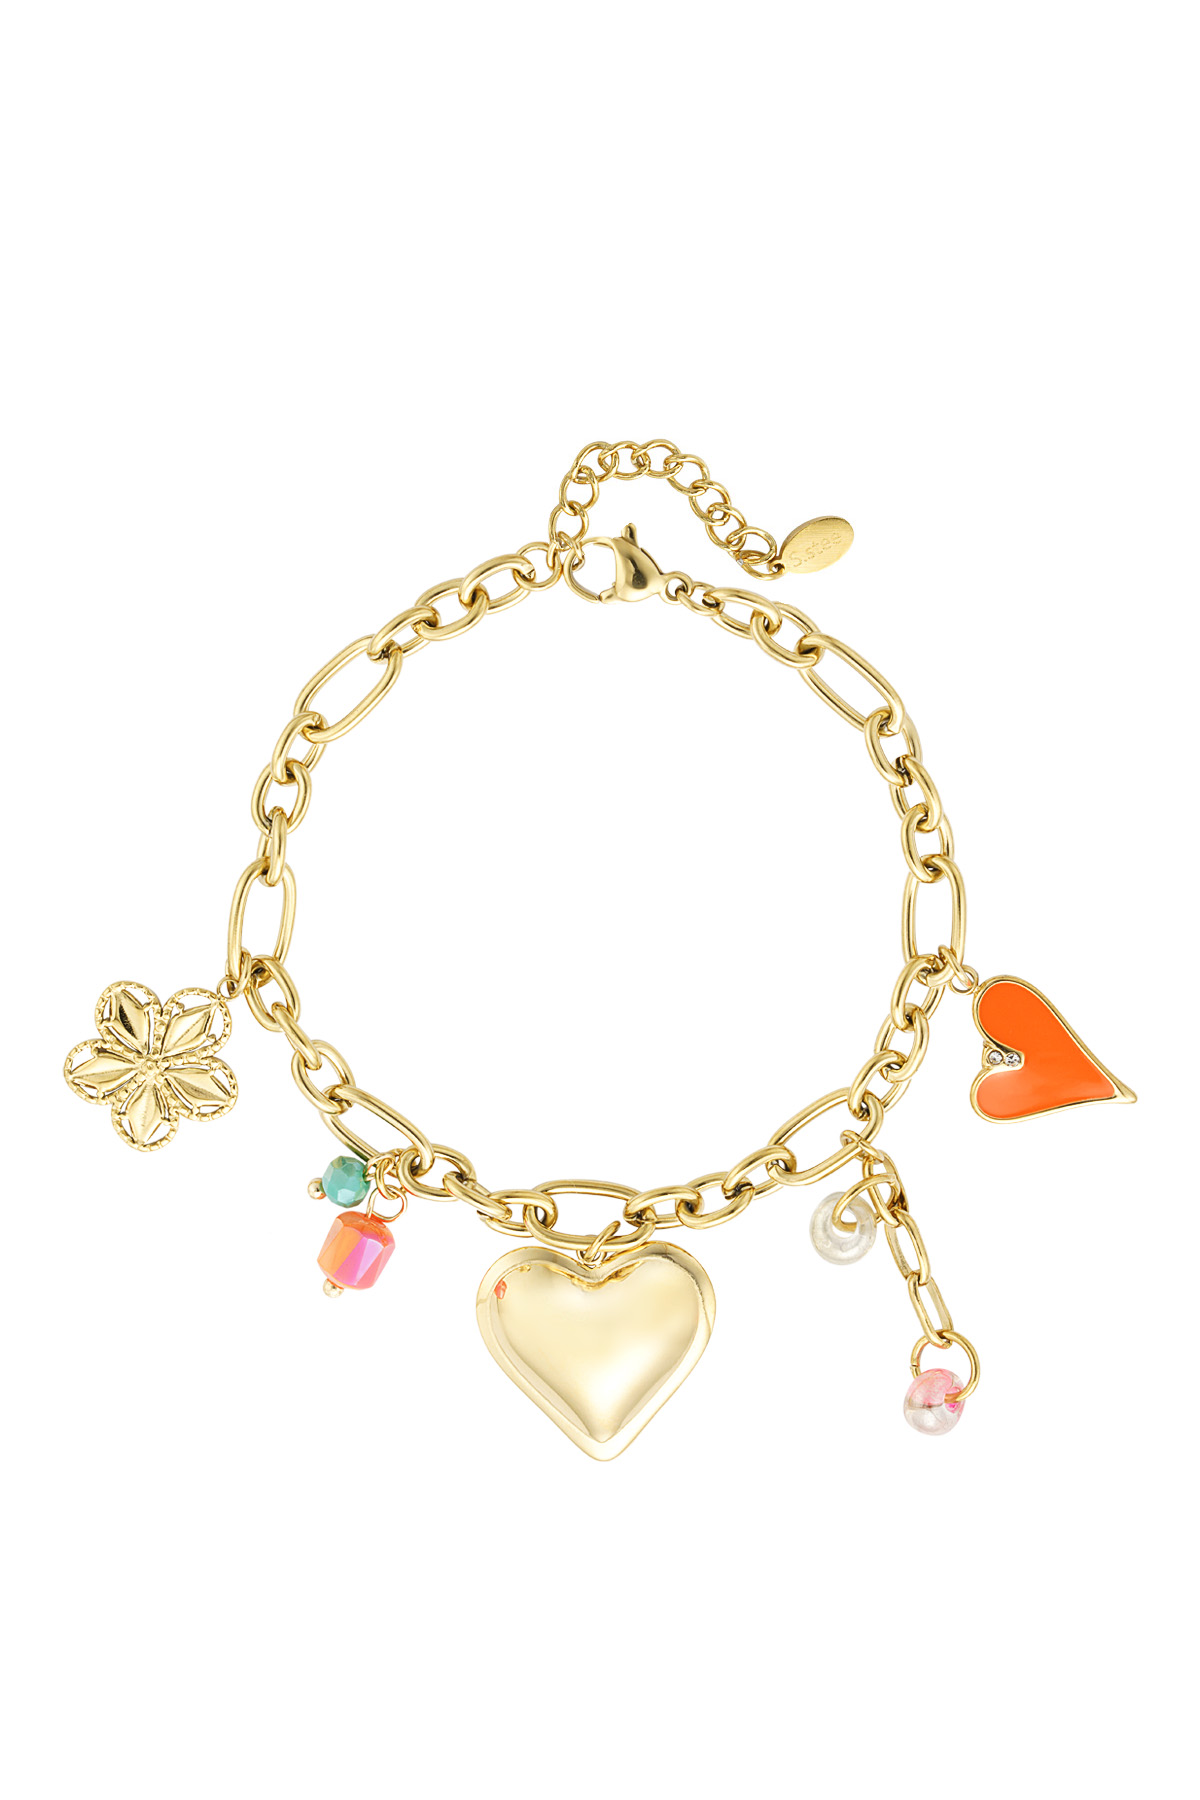 Charm bracelet summer of joy - gold h5 